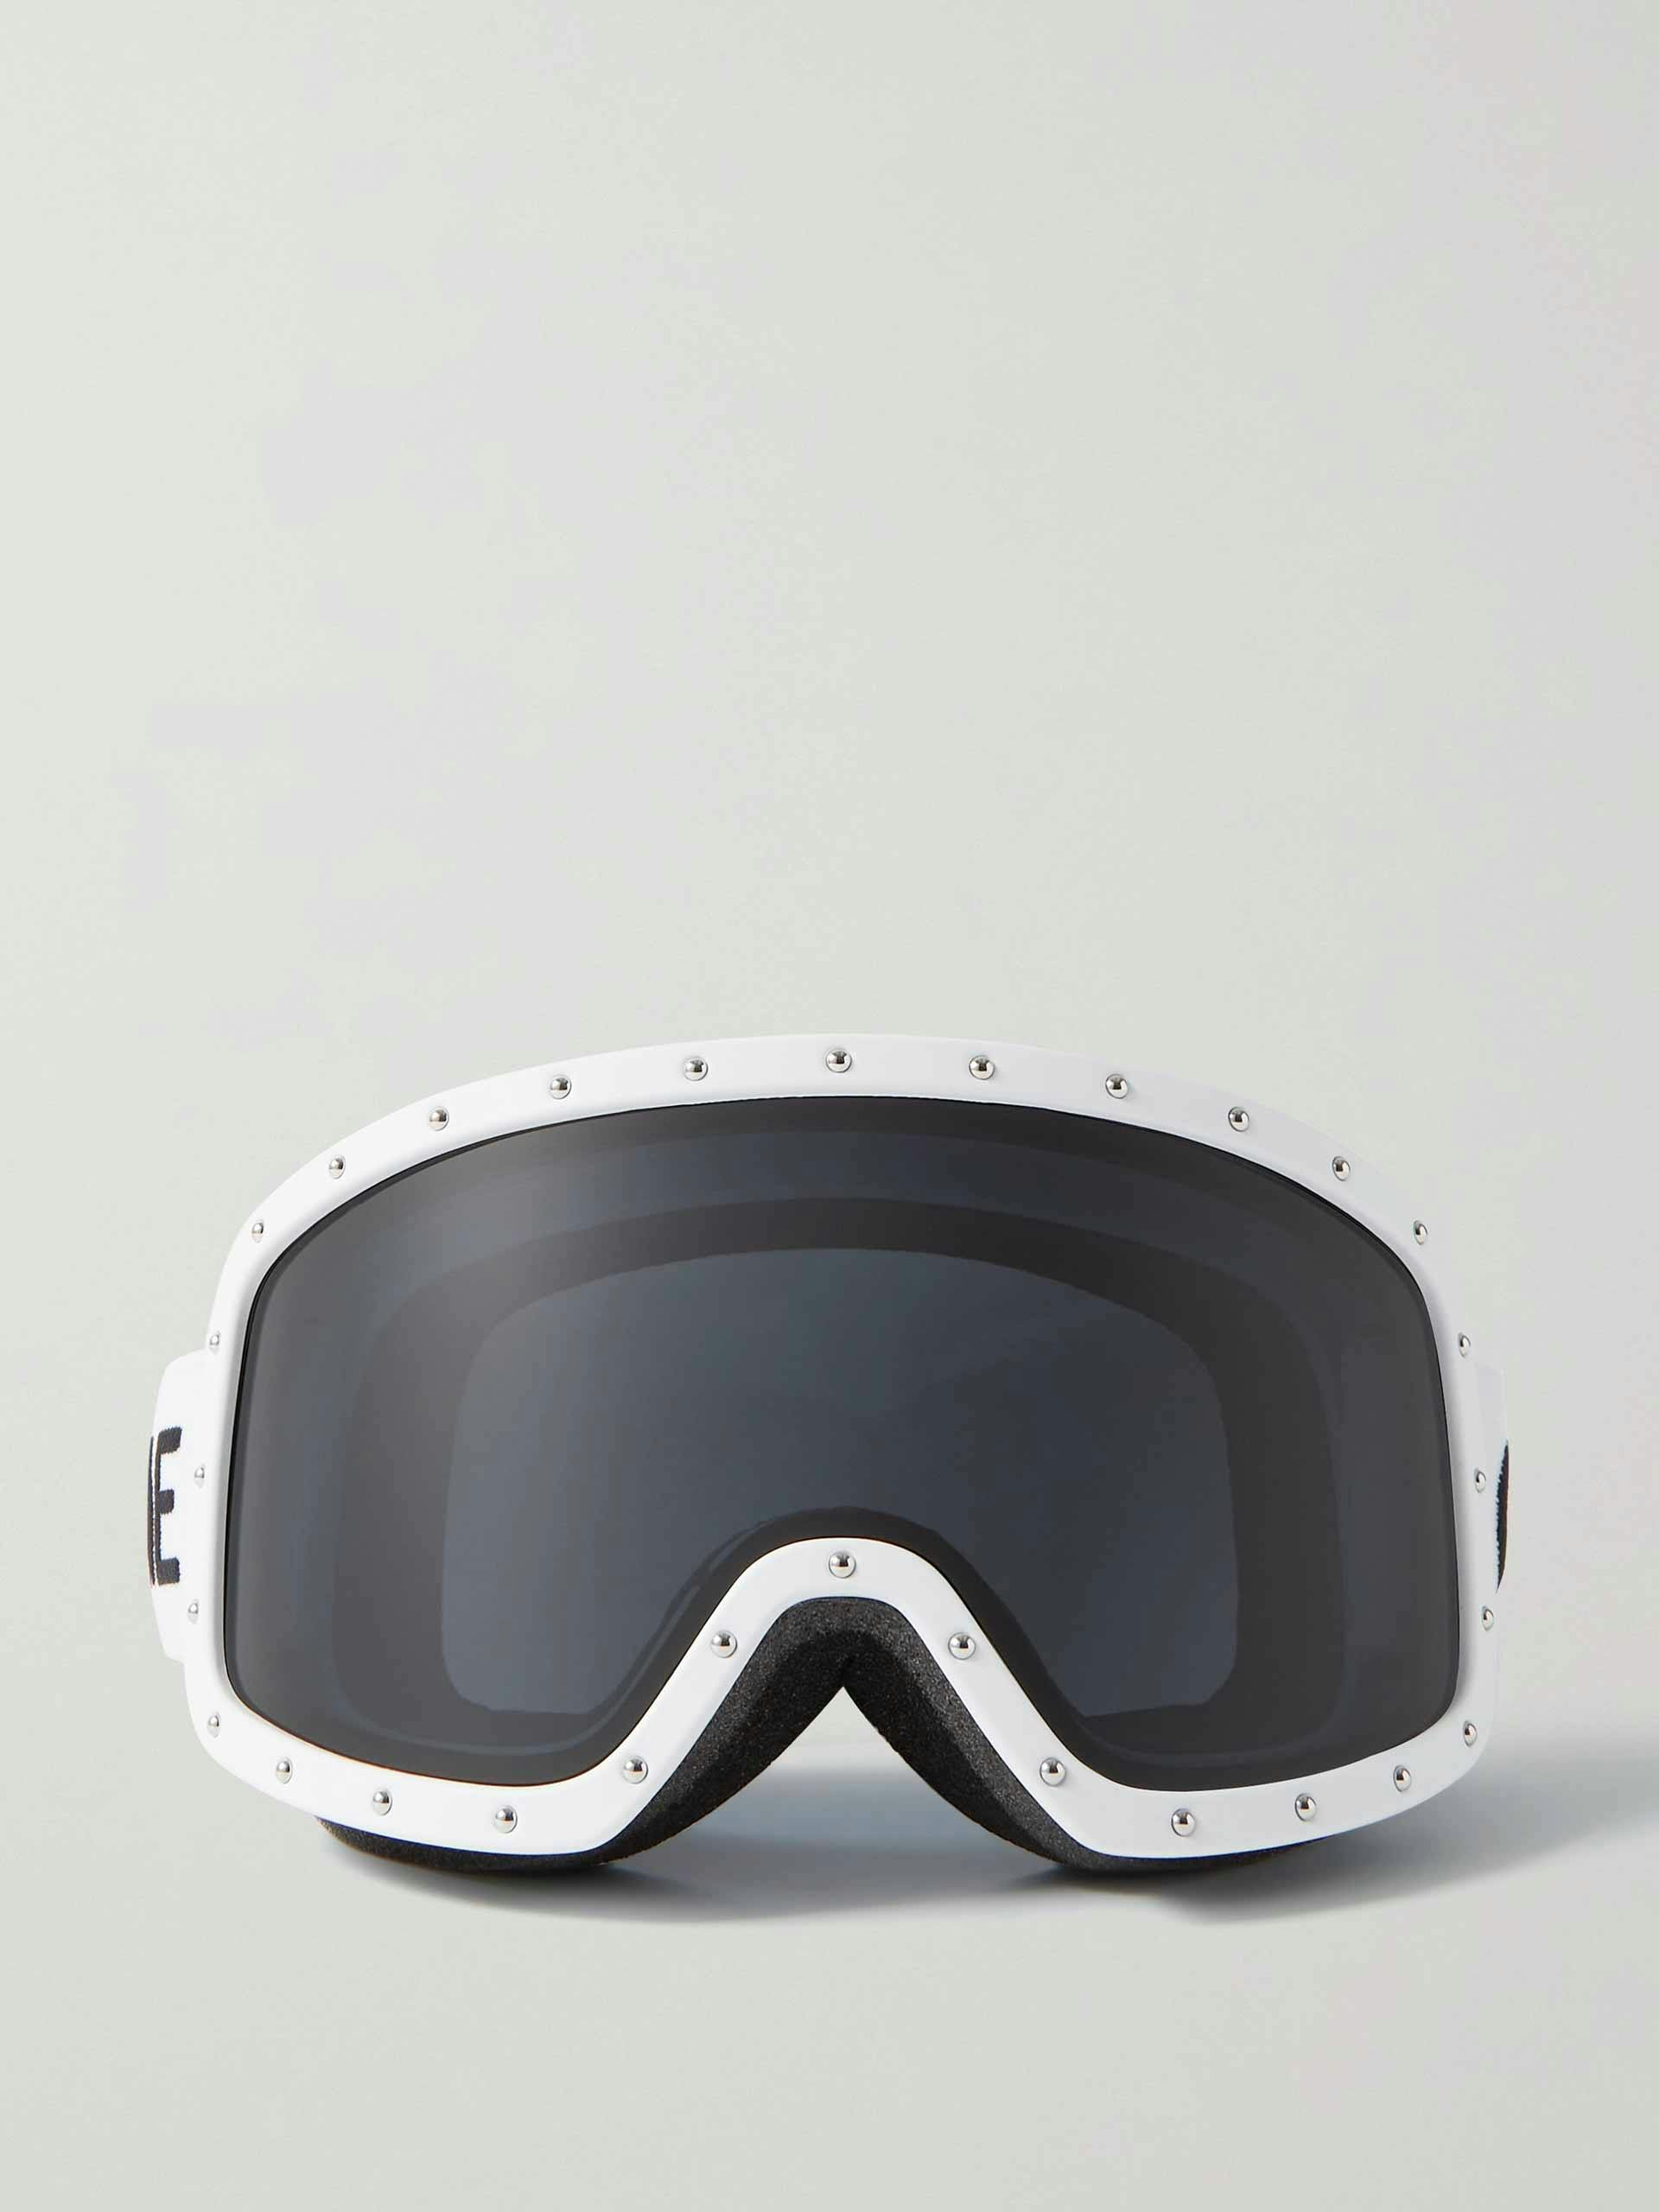 Studded ski goggles